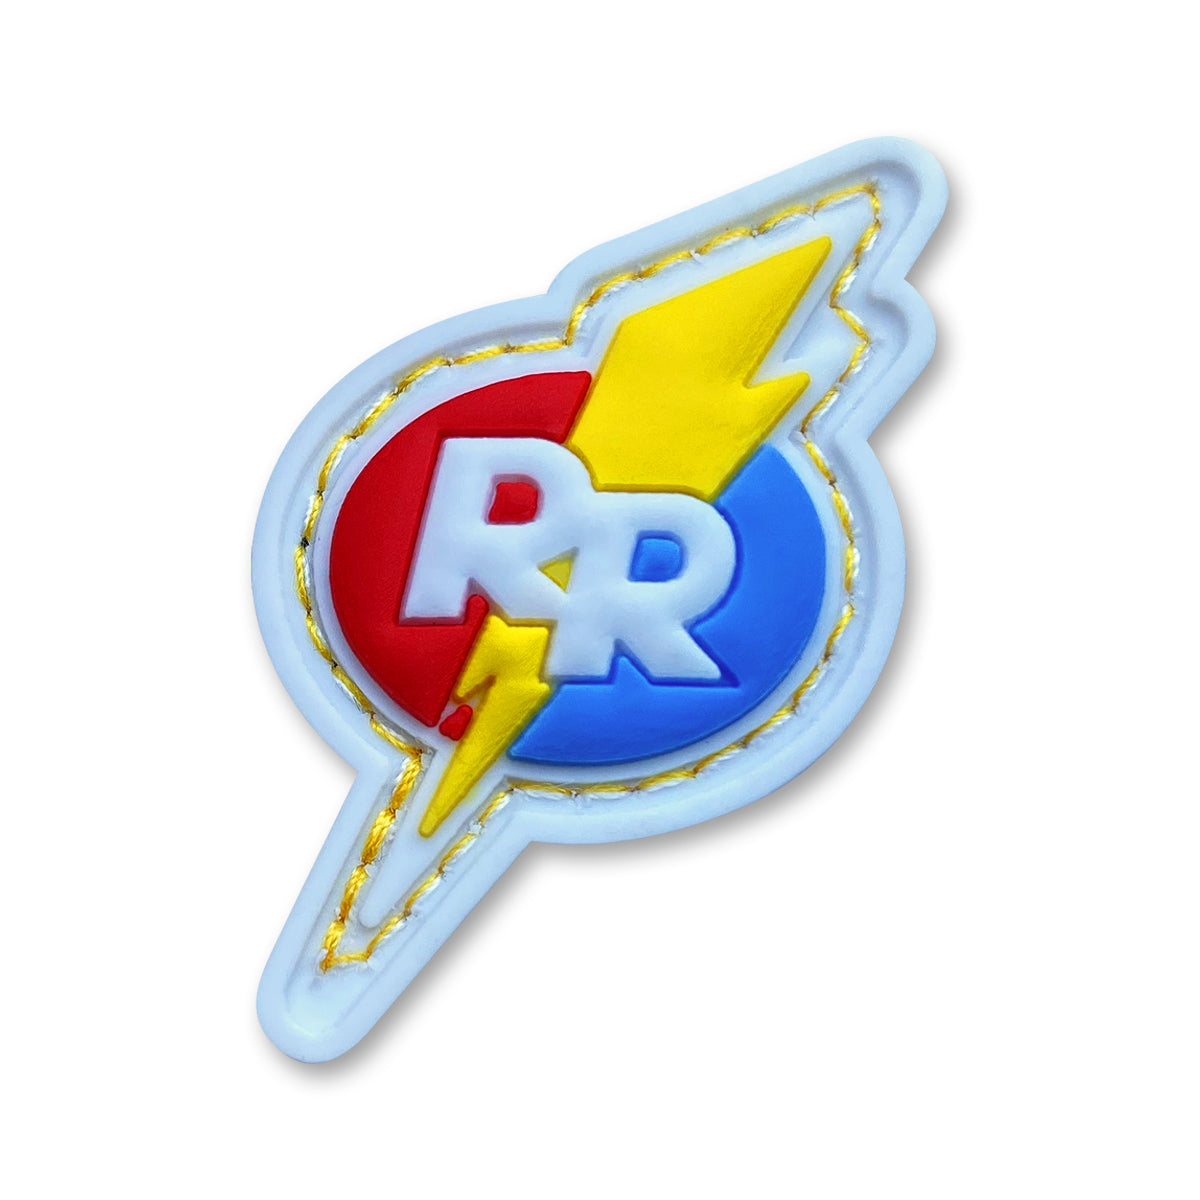 Ranger Rescue RE - datacrew